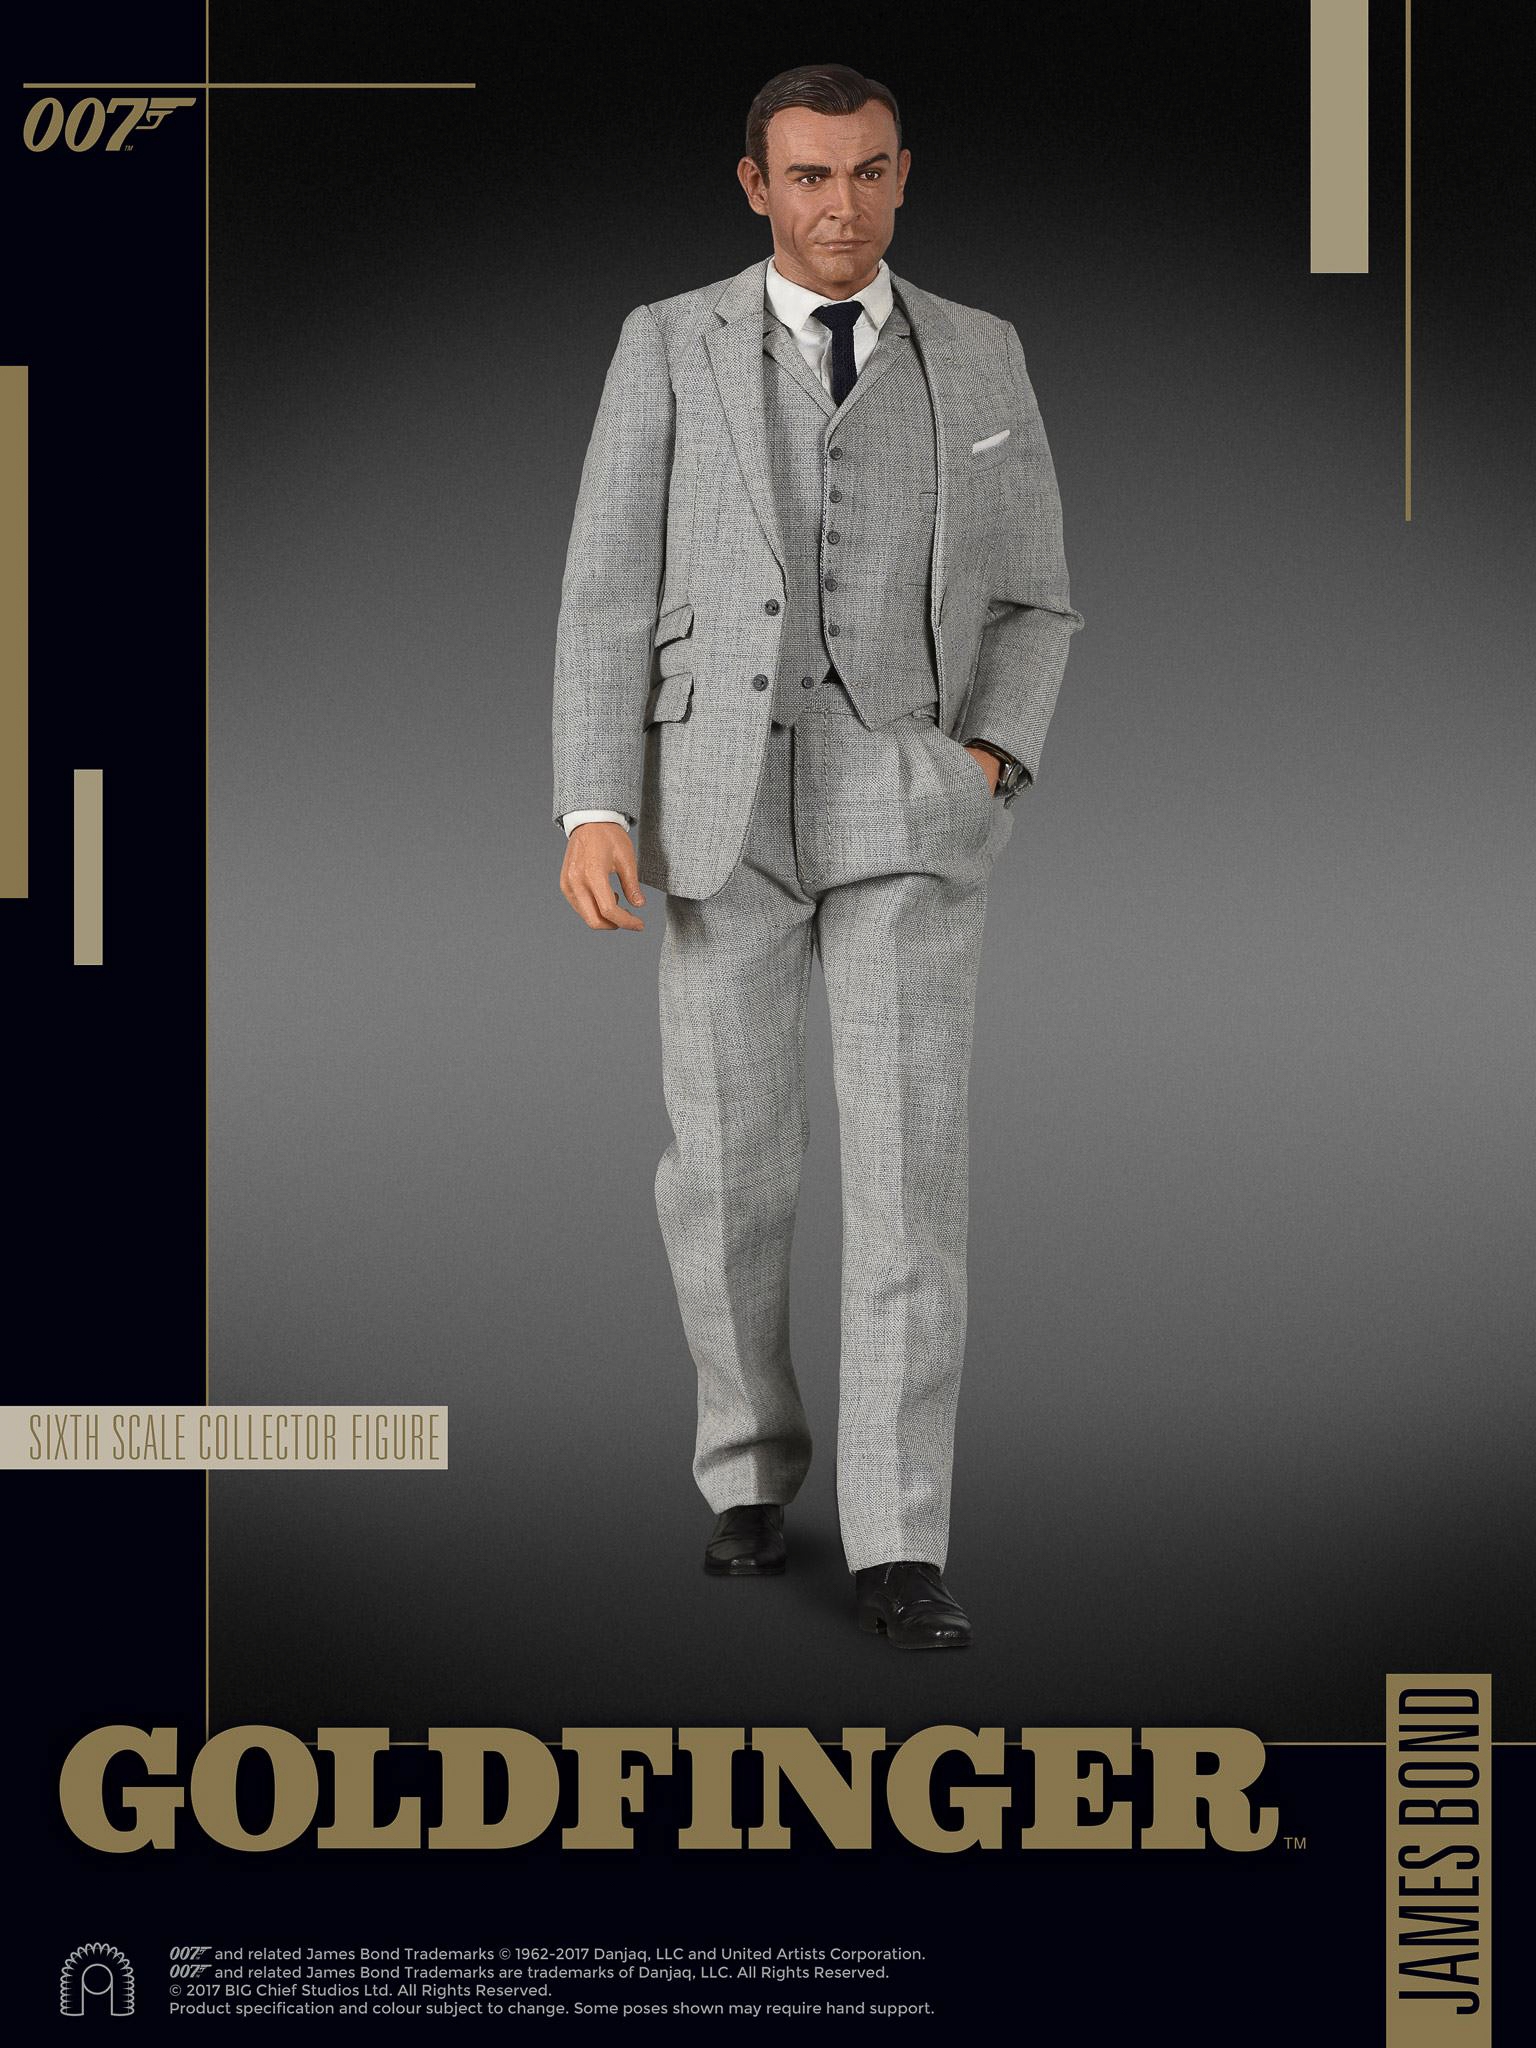 Big-Chief-James-Bond-Goldfinger-Oddjob-Full-Reveal-002.jpg